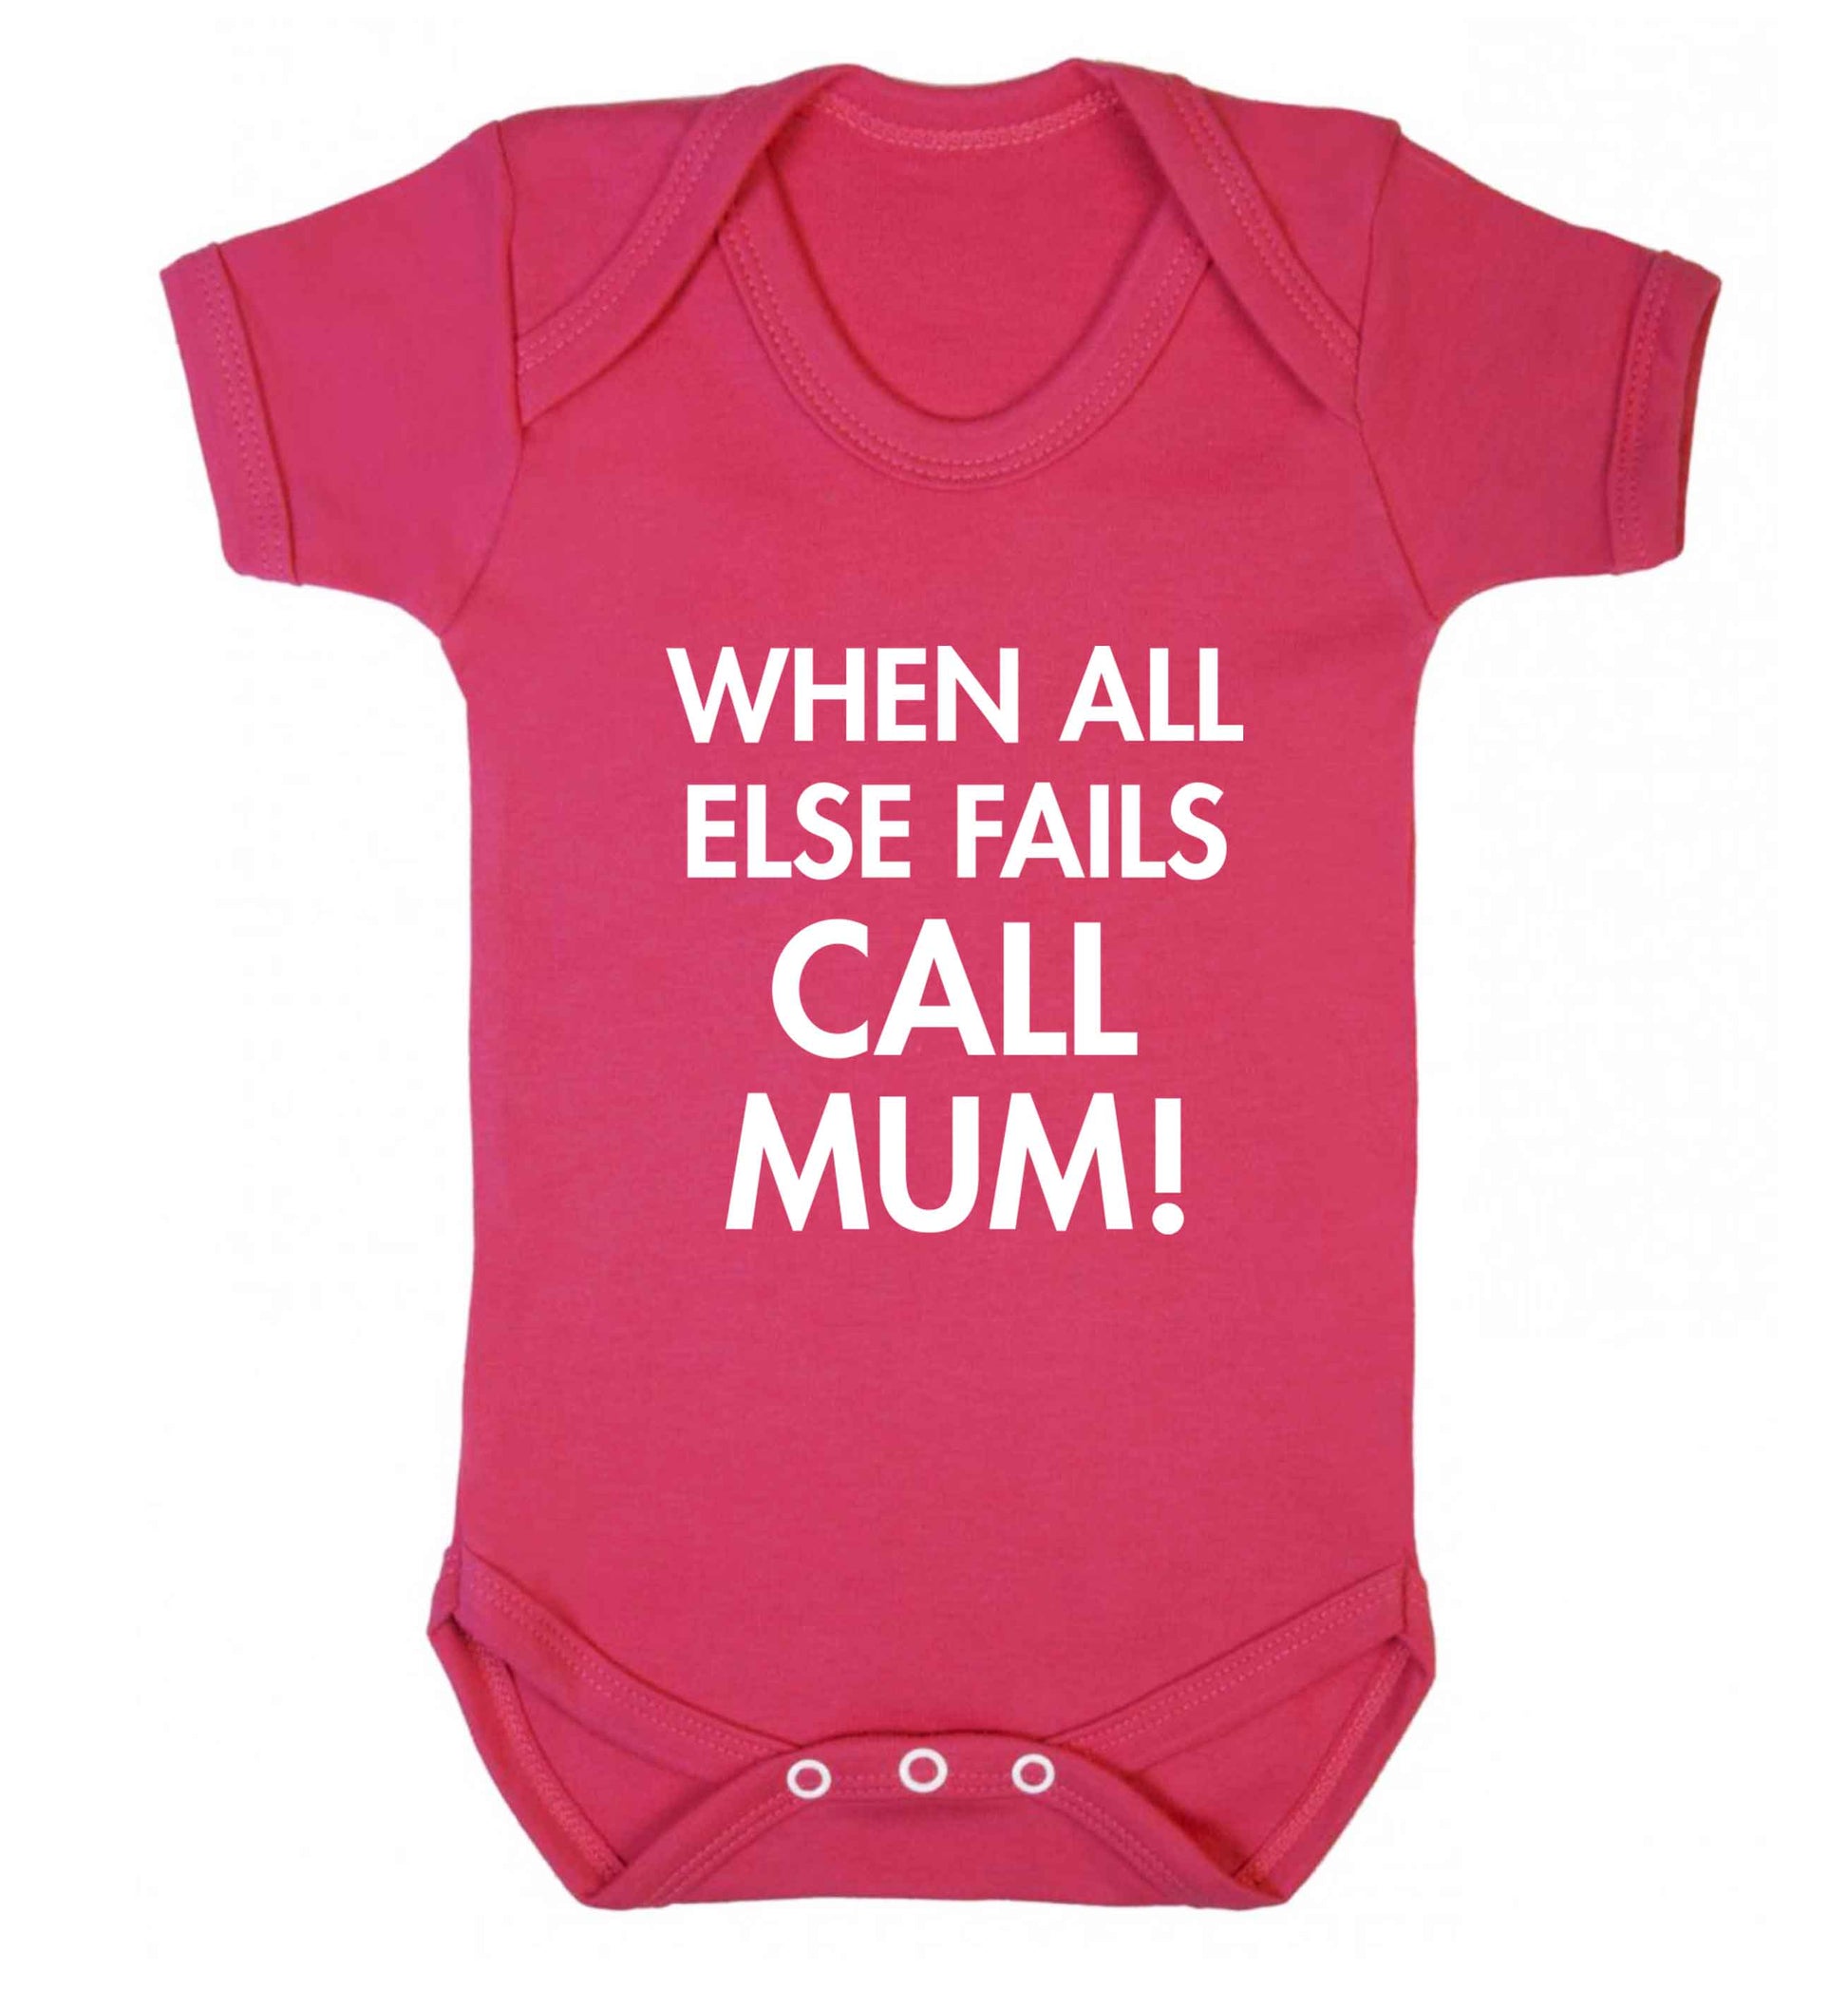 When all else fails call mum! baby vest dark pink 18-24 months